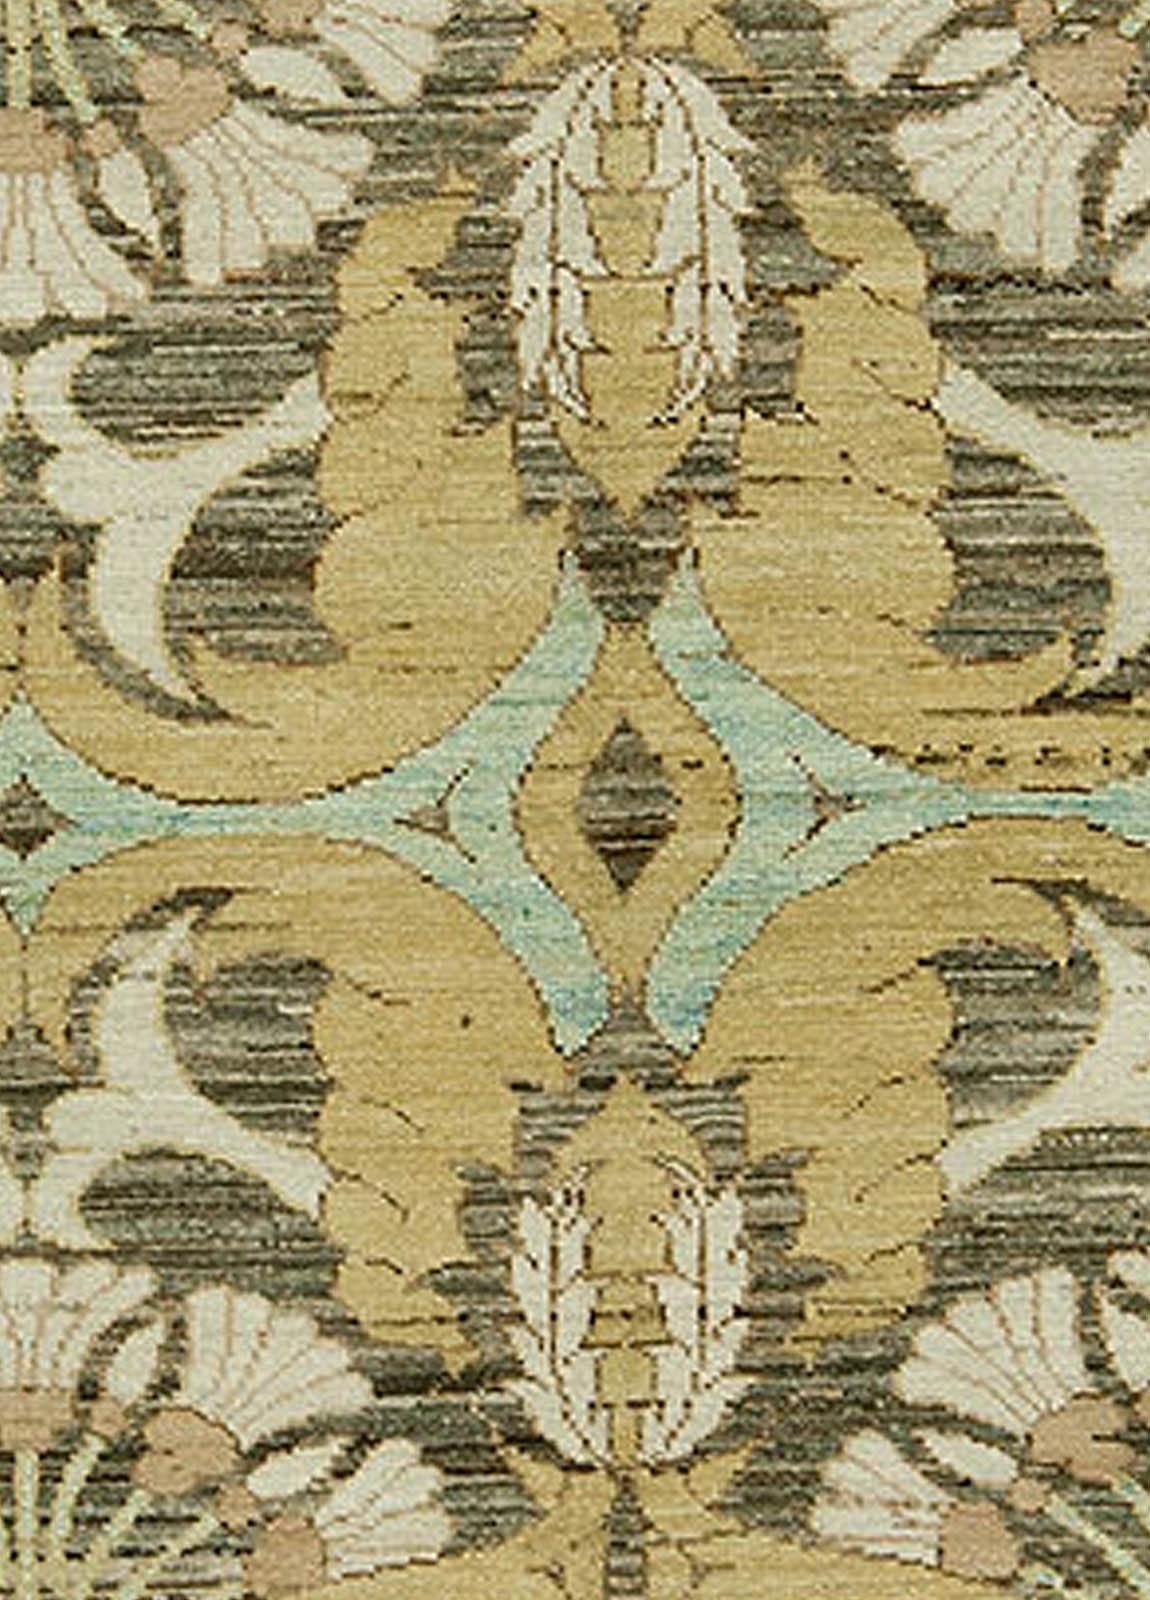 Contemporary Spanish cuenca inspired rug by Doris Leslie Blau.
Size: 5'6